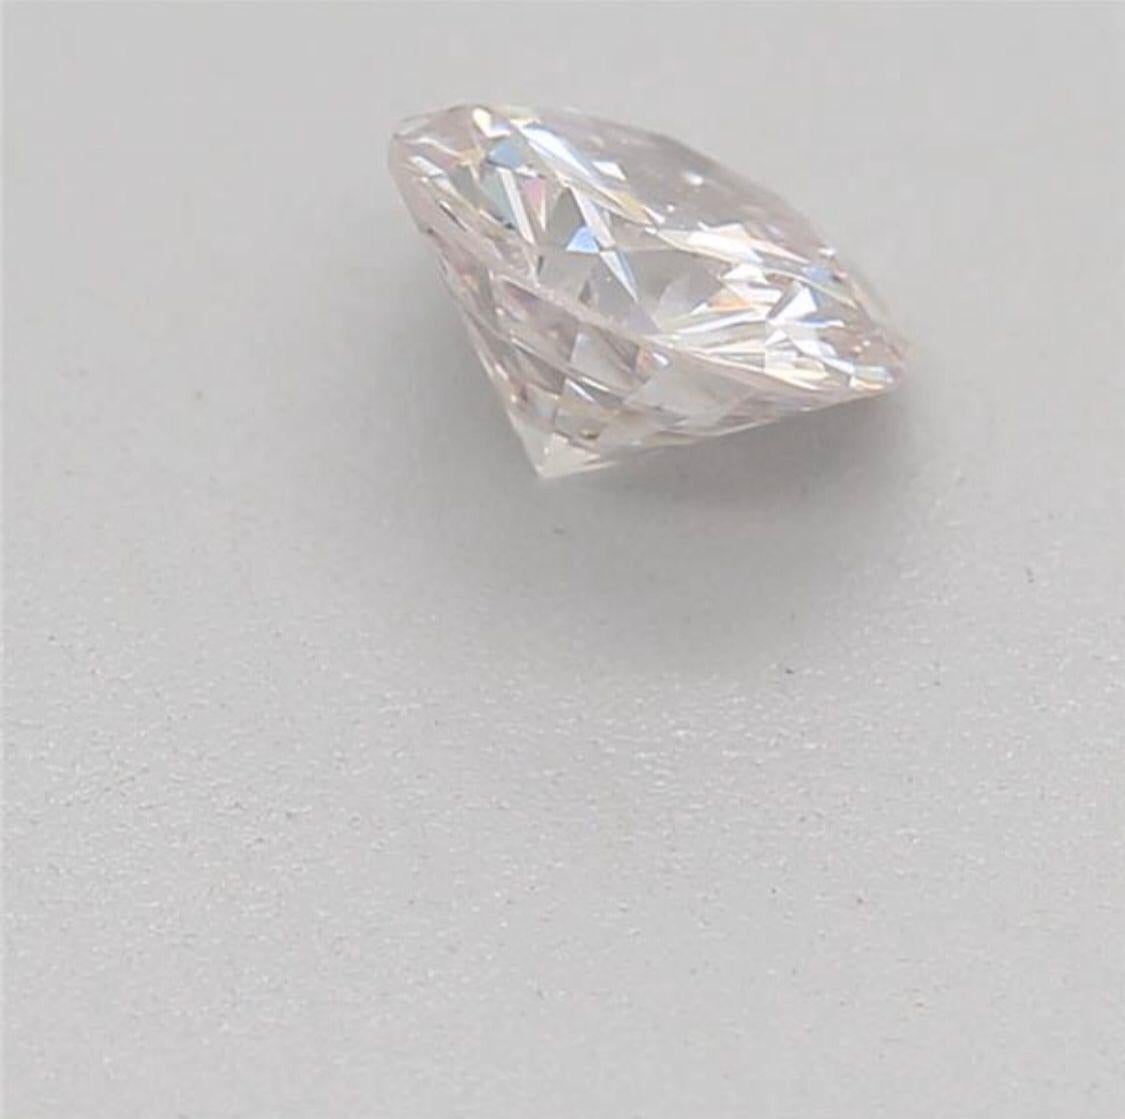 Diamant rose pâle taille ronde de 0,31 carat de pureté SI1 certifié CGL en vente 1